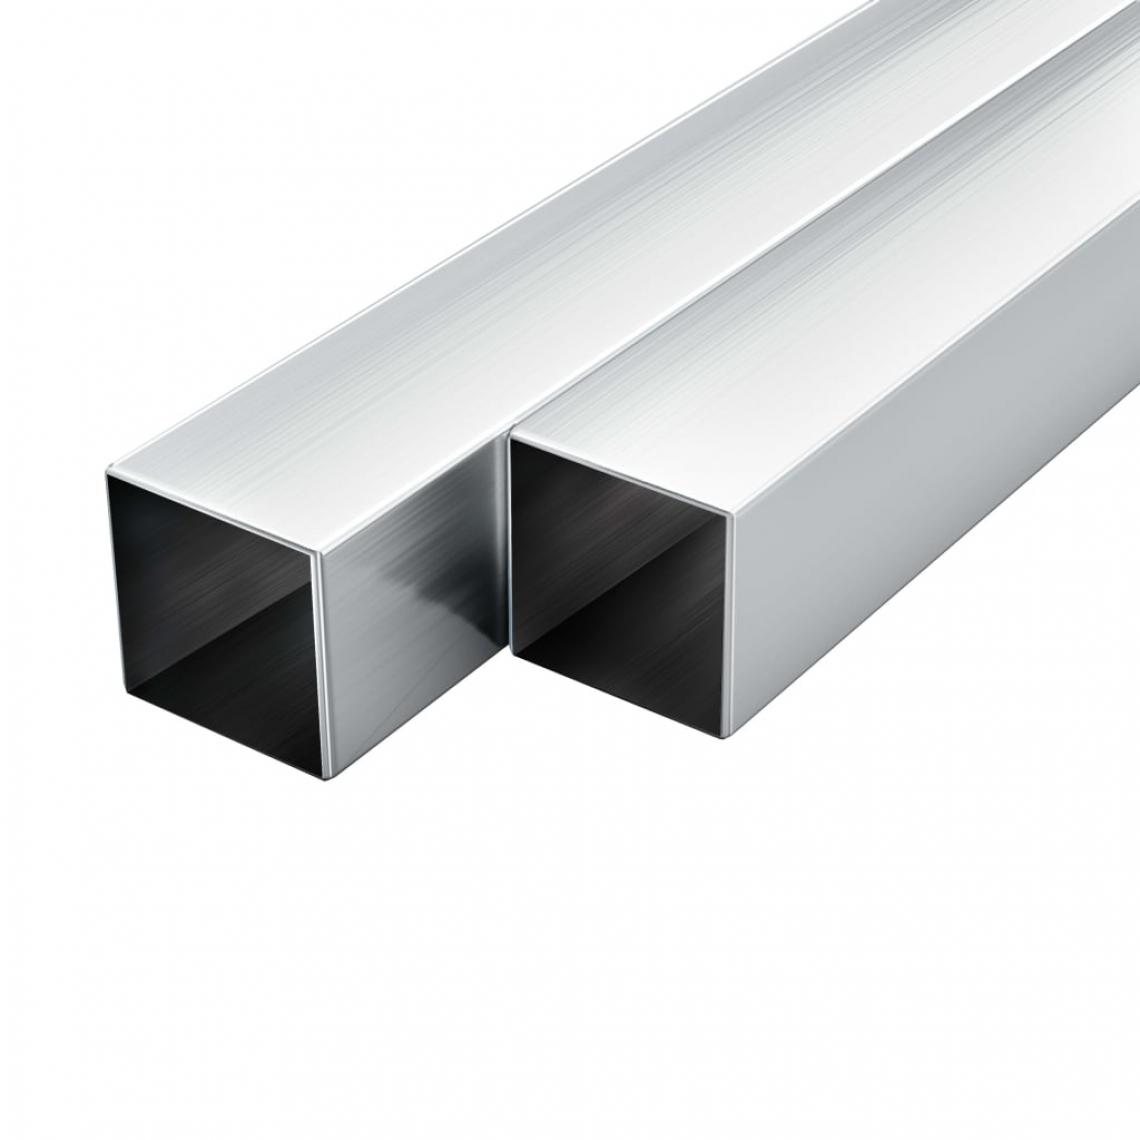 Vidaxl - vidaXL Tube avec section carrée Aluminium 6 pcs 2 m 30x30x2 mm - Cheville